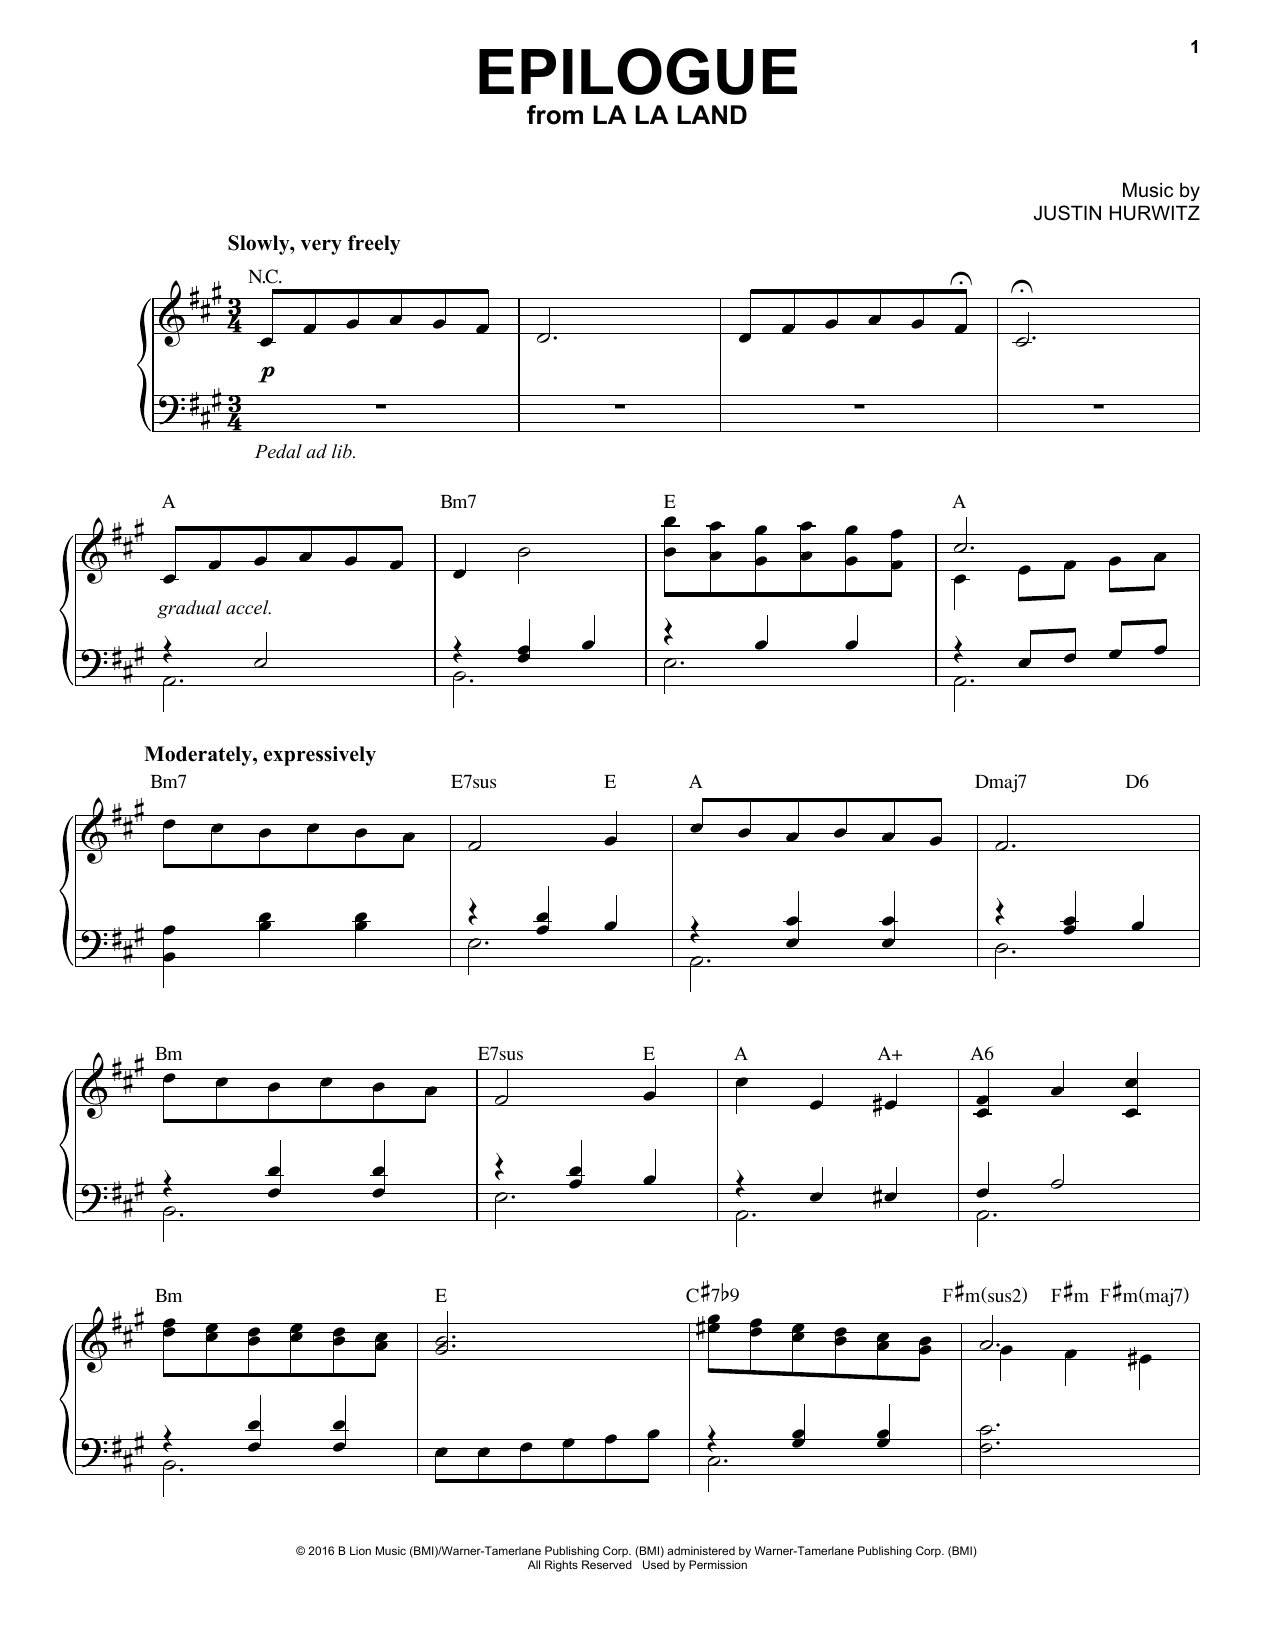 Justin Hurwitz Epilogue Sheet Music Notes & Chords for Piano Duet - Download or Print PDF